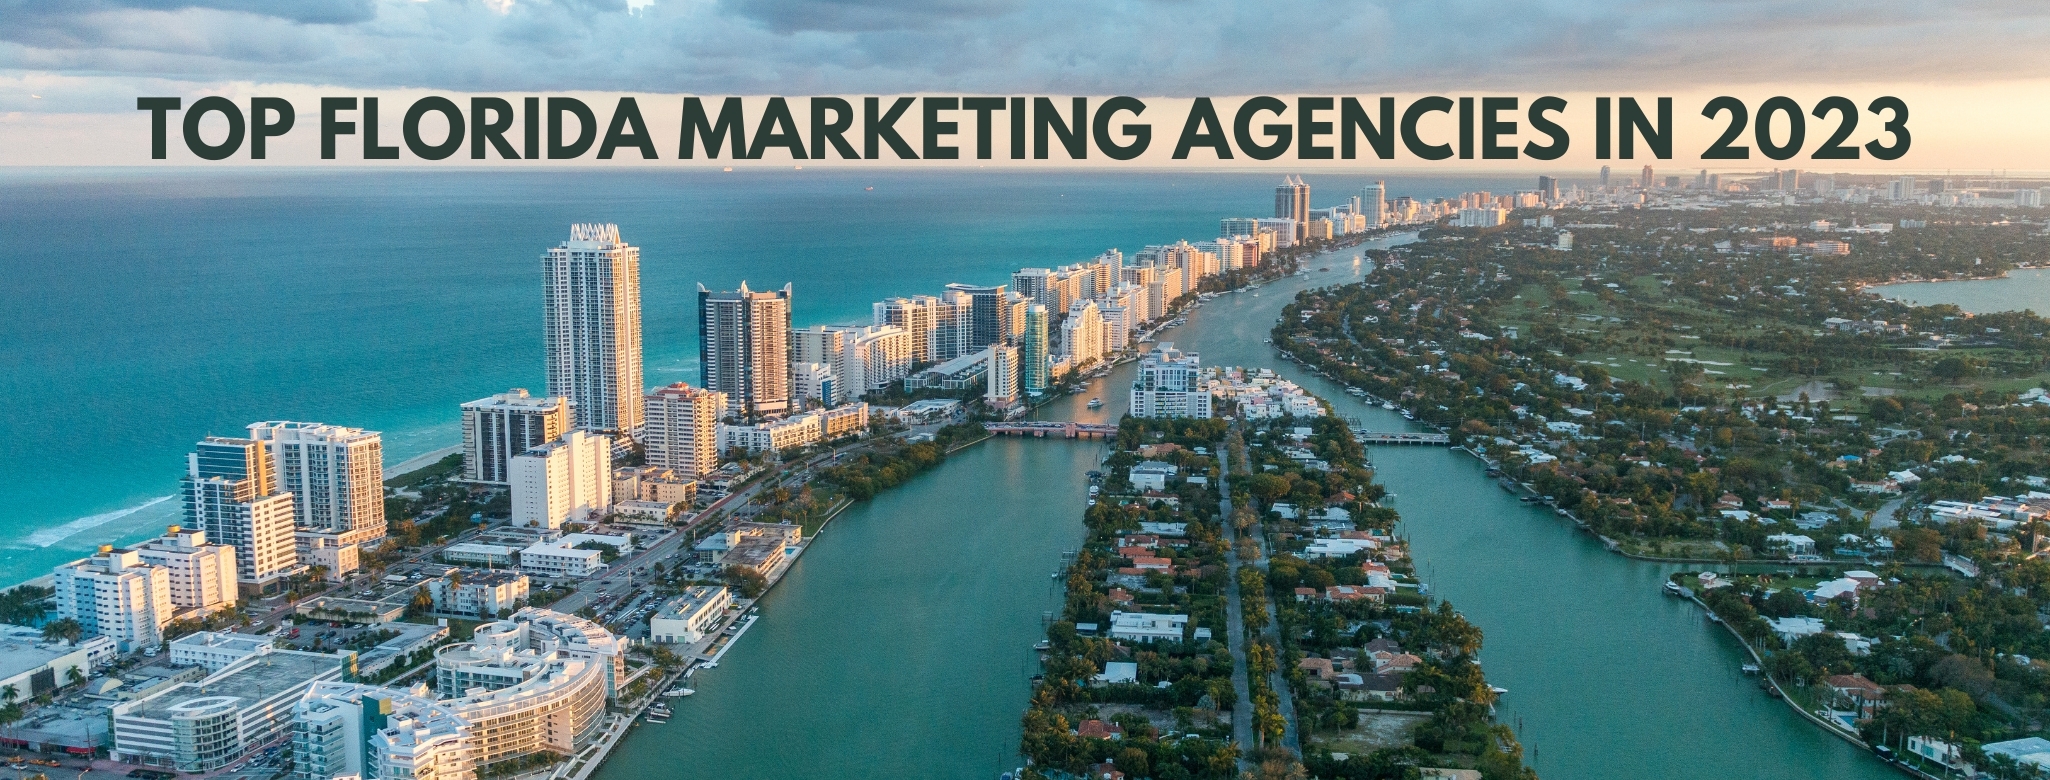 Florida marketing agencies